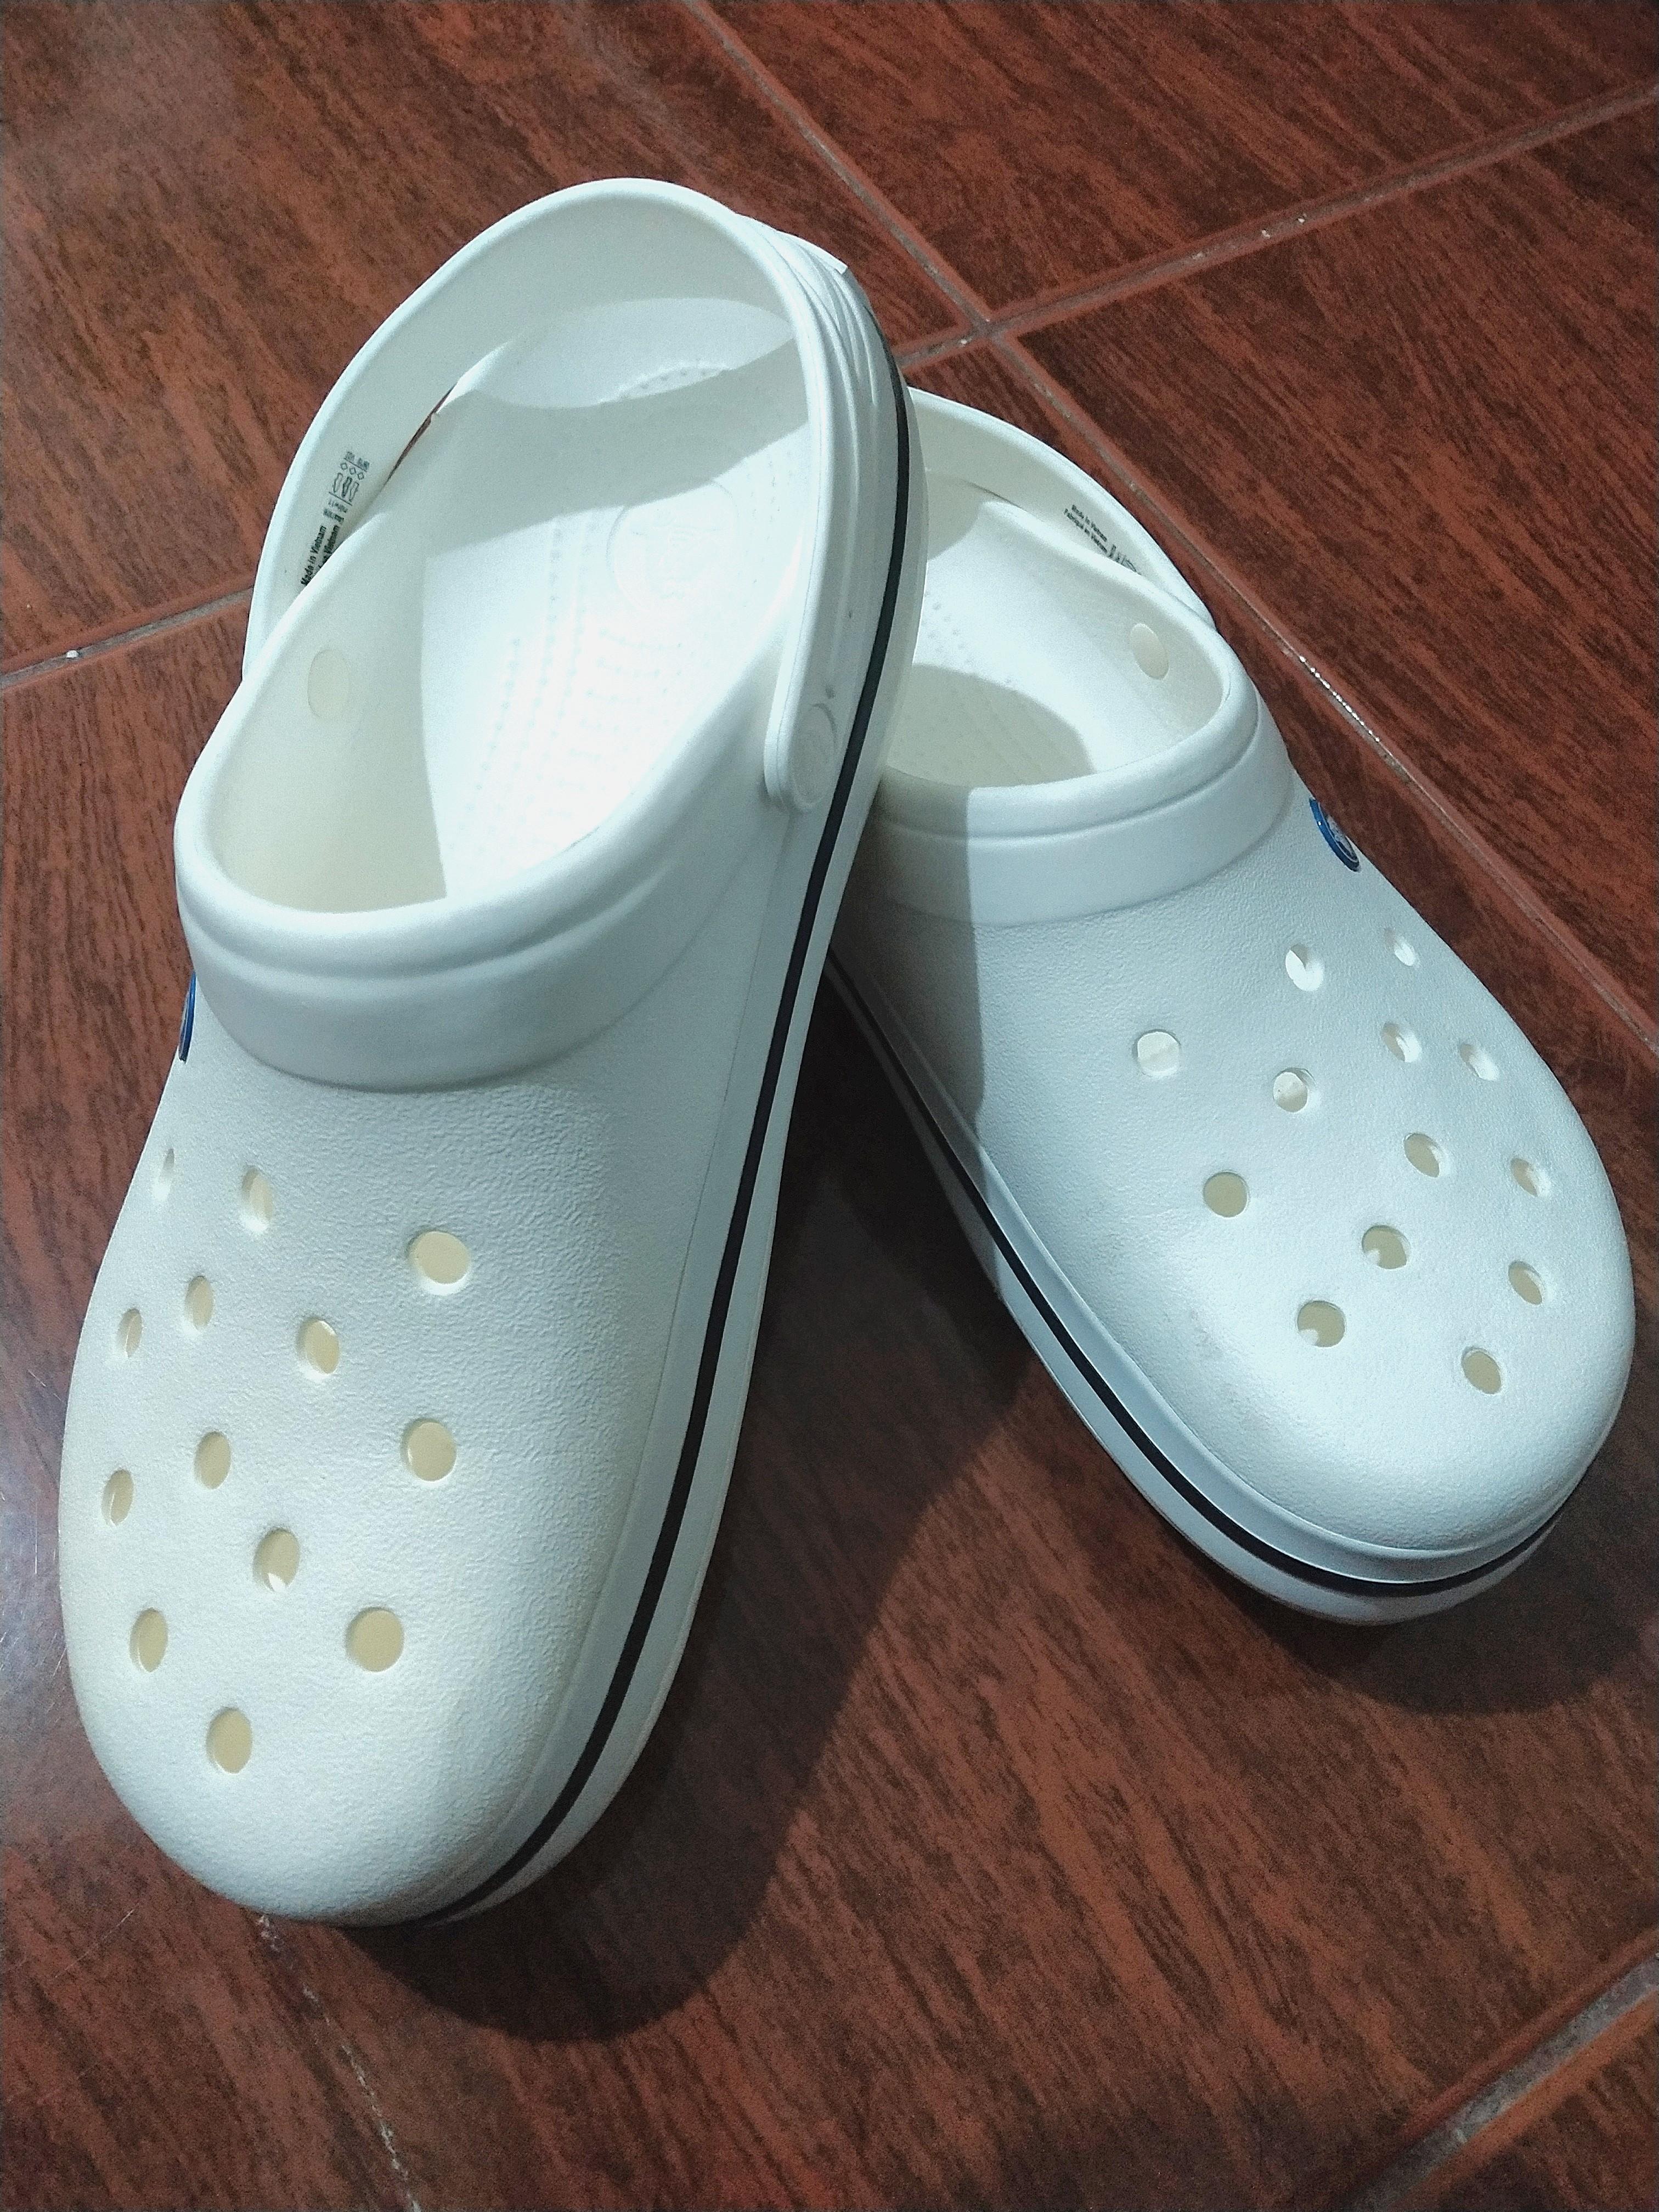 crocs size 9 11